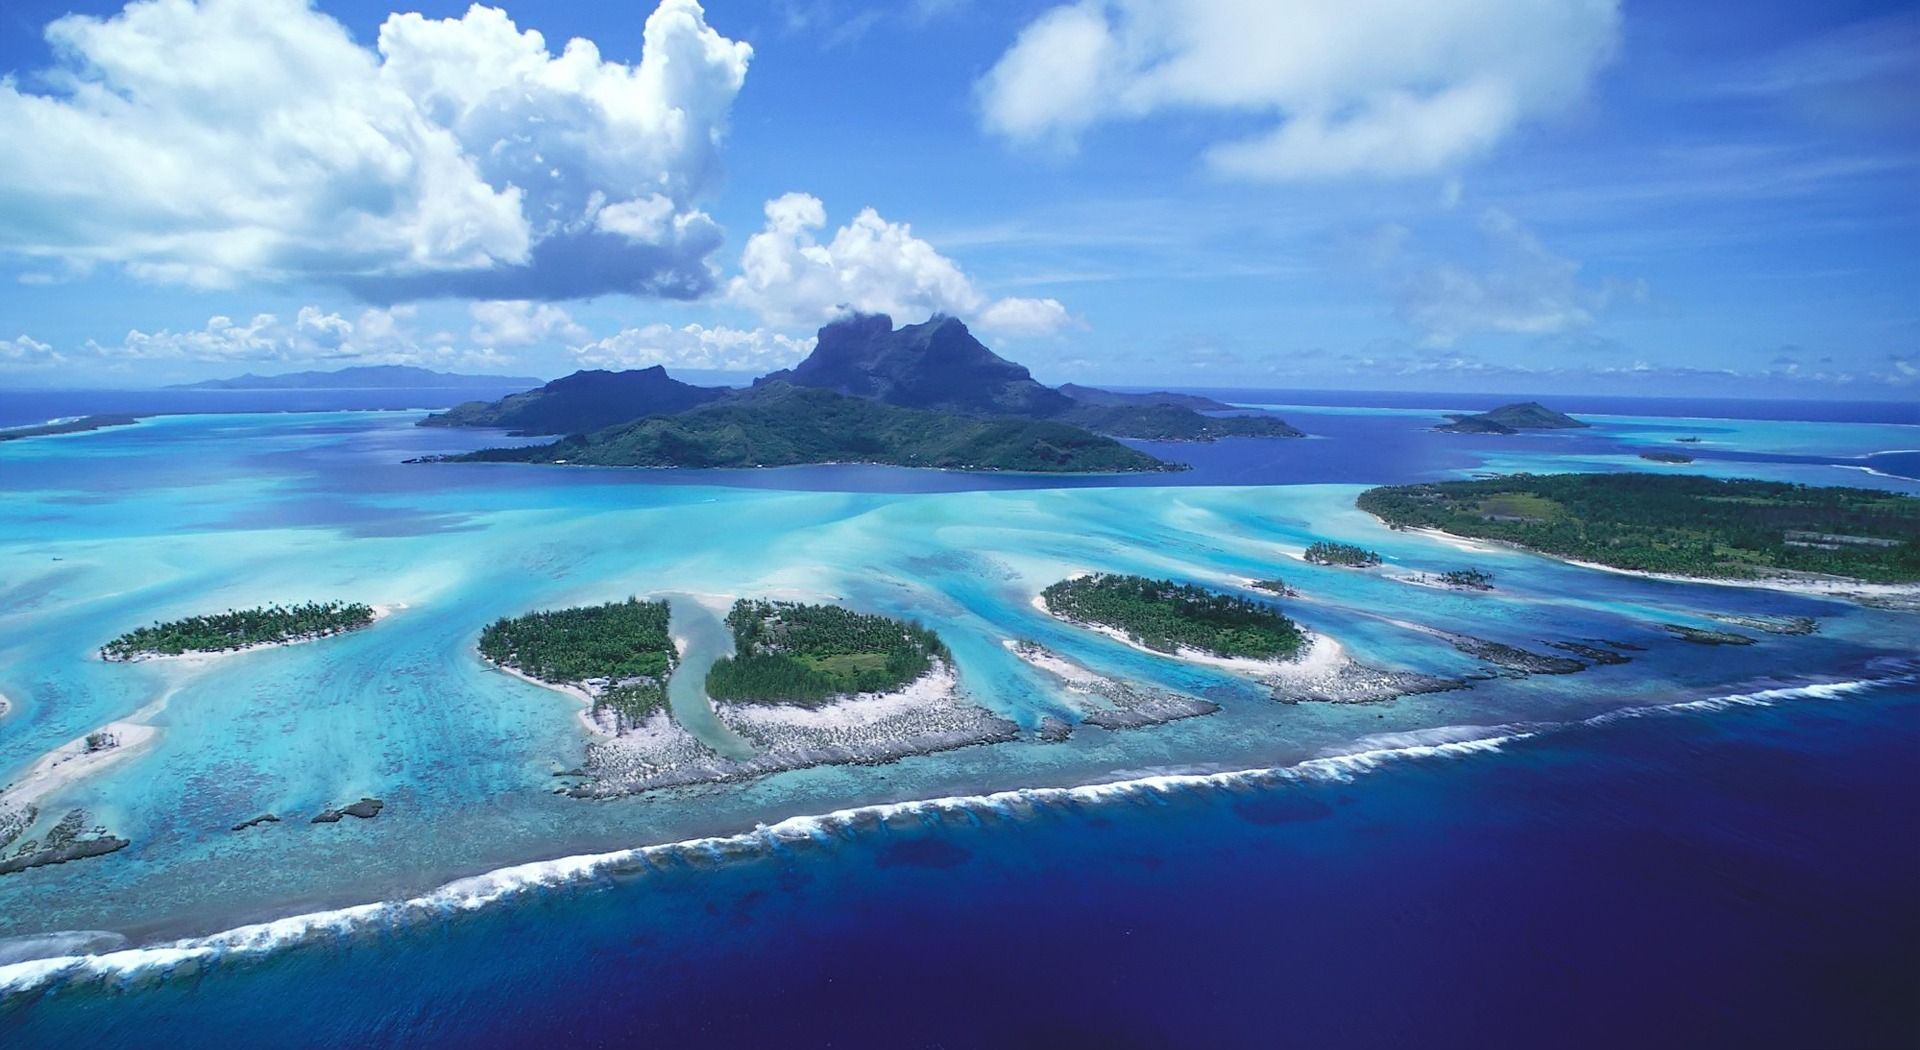 The Lau Archipelago Fiji